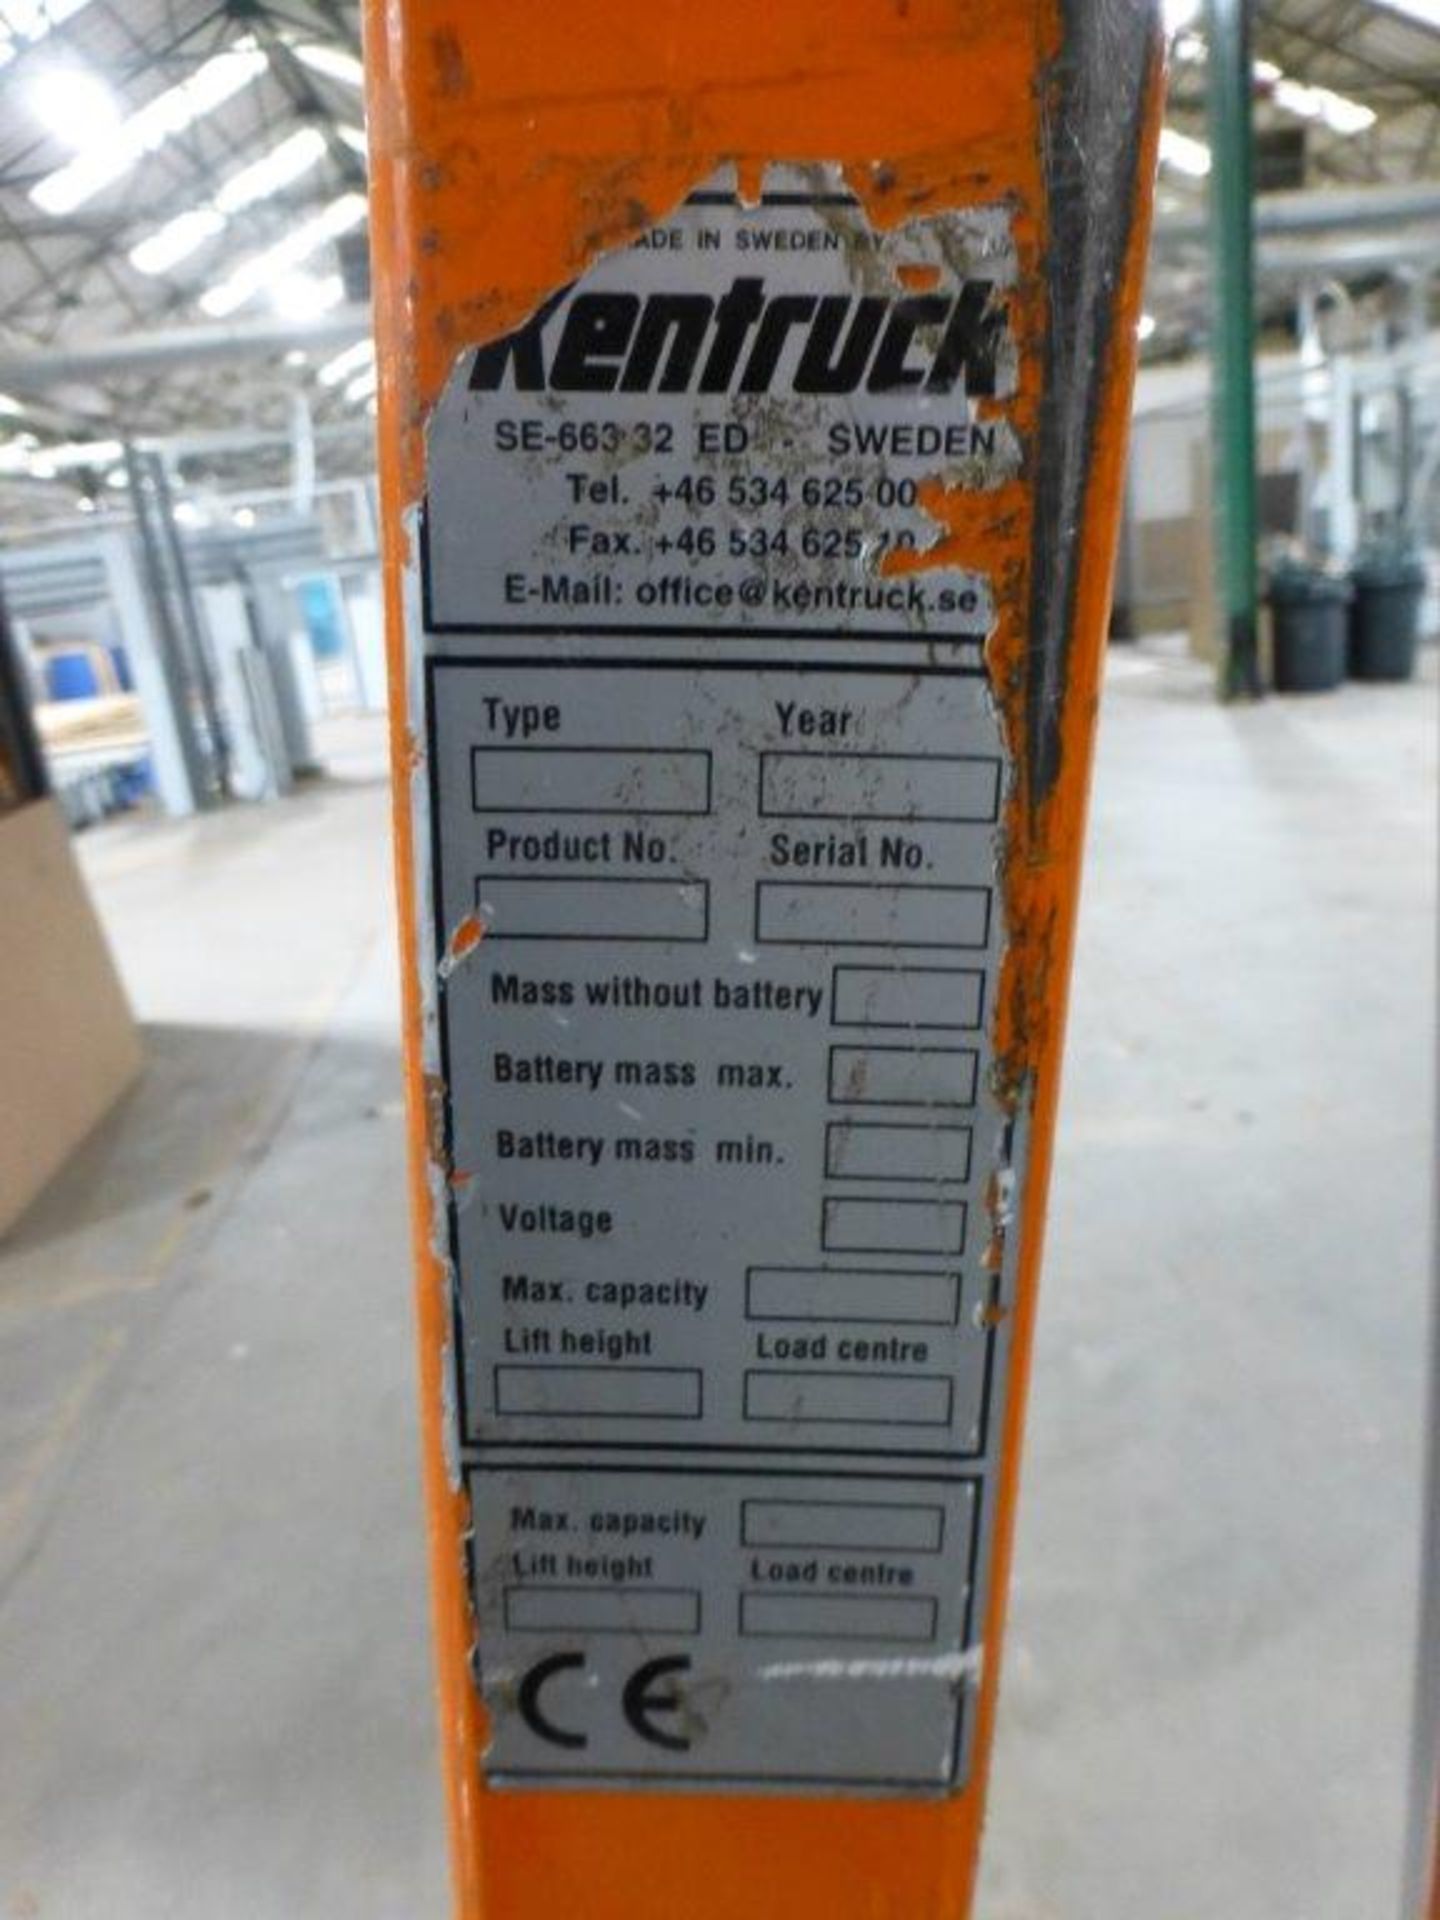 Kentruck electric lift pallet truck - Image 2 of 2